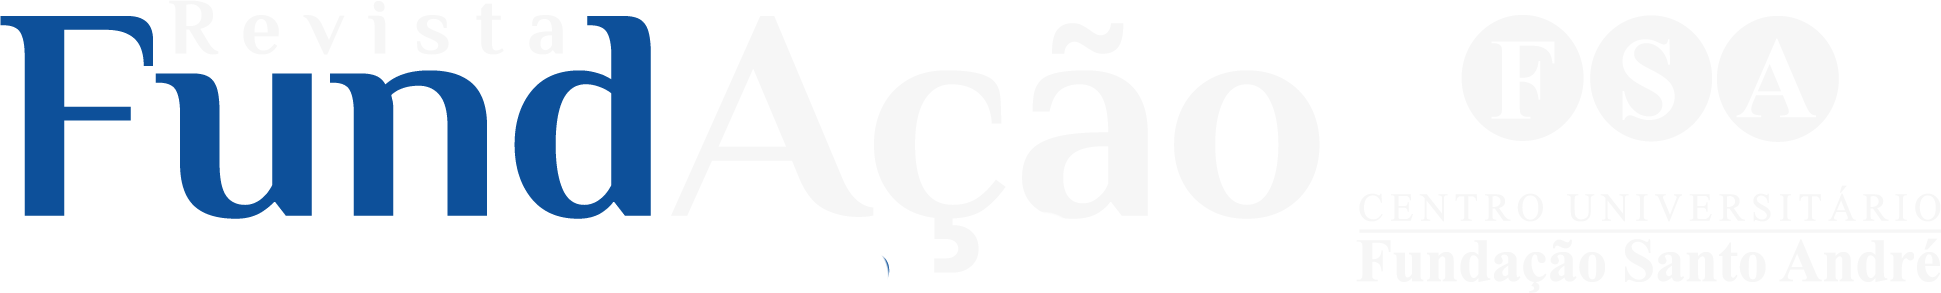 Logo Revista Fundacao